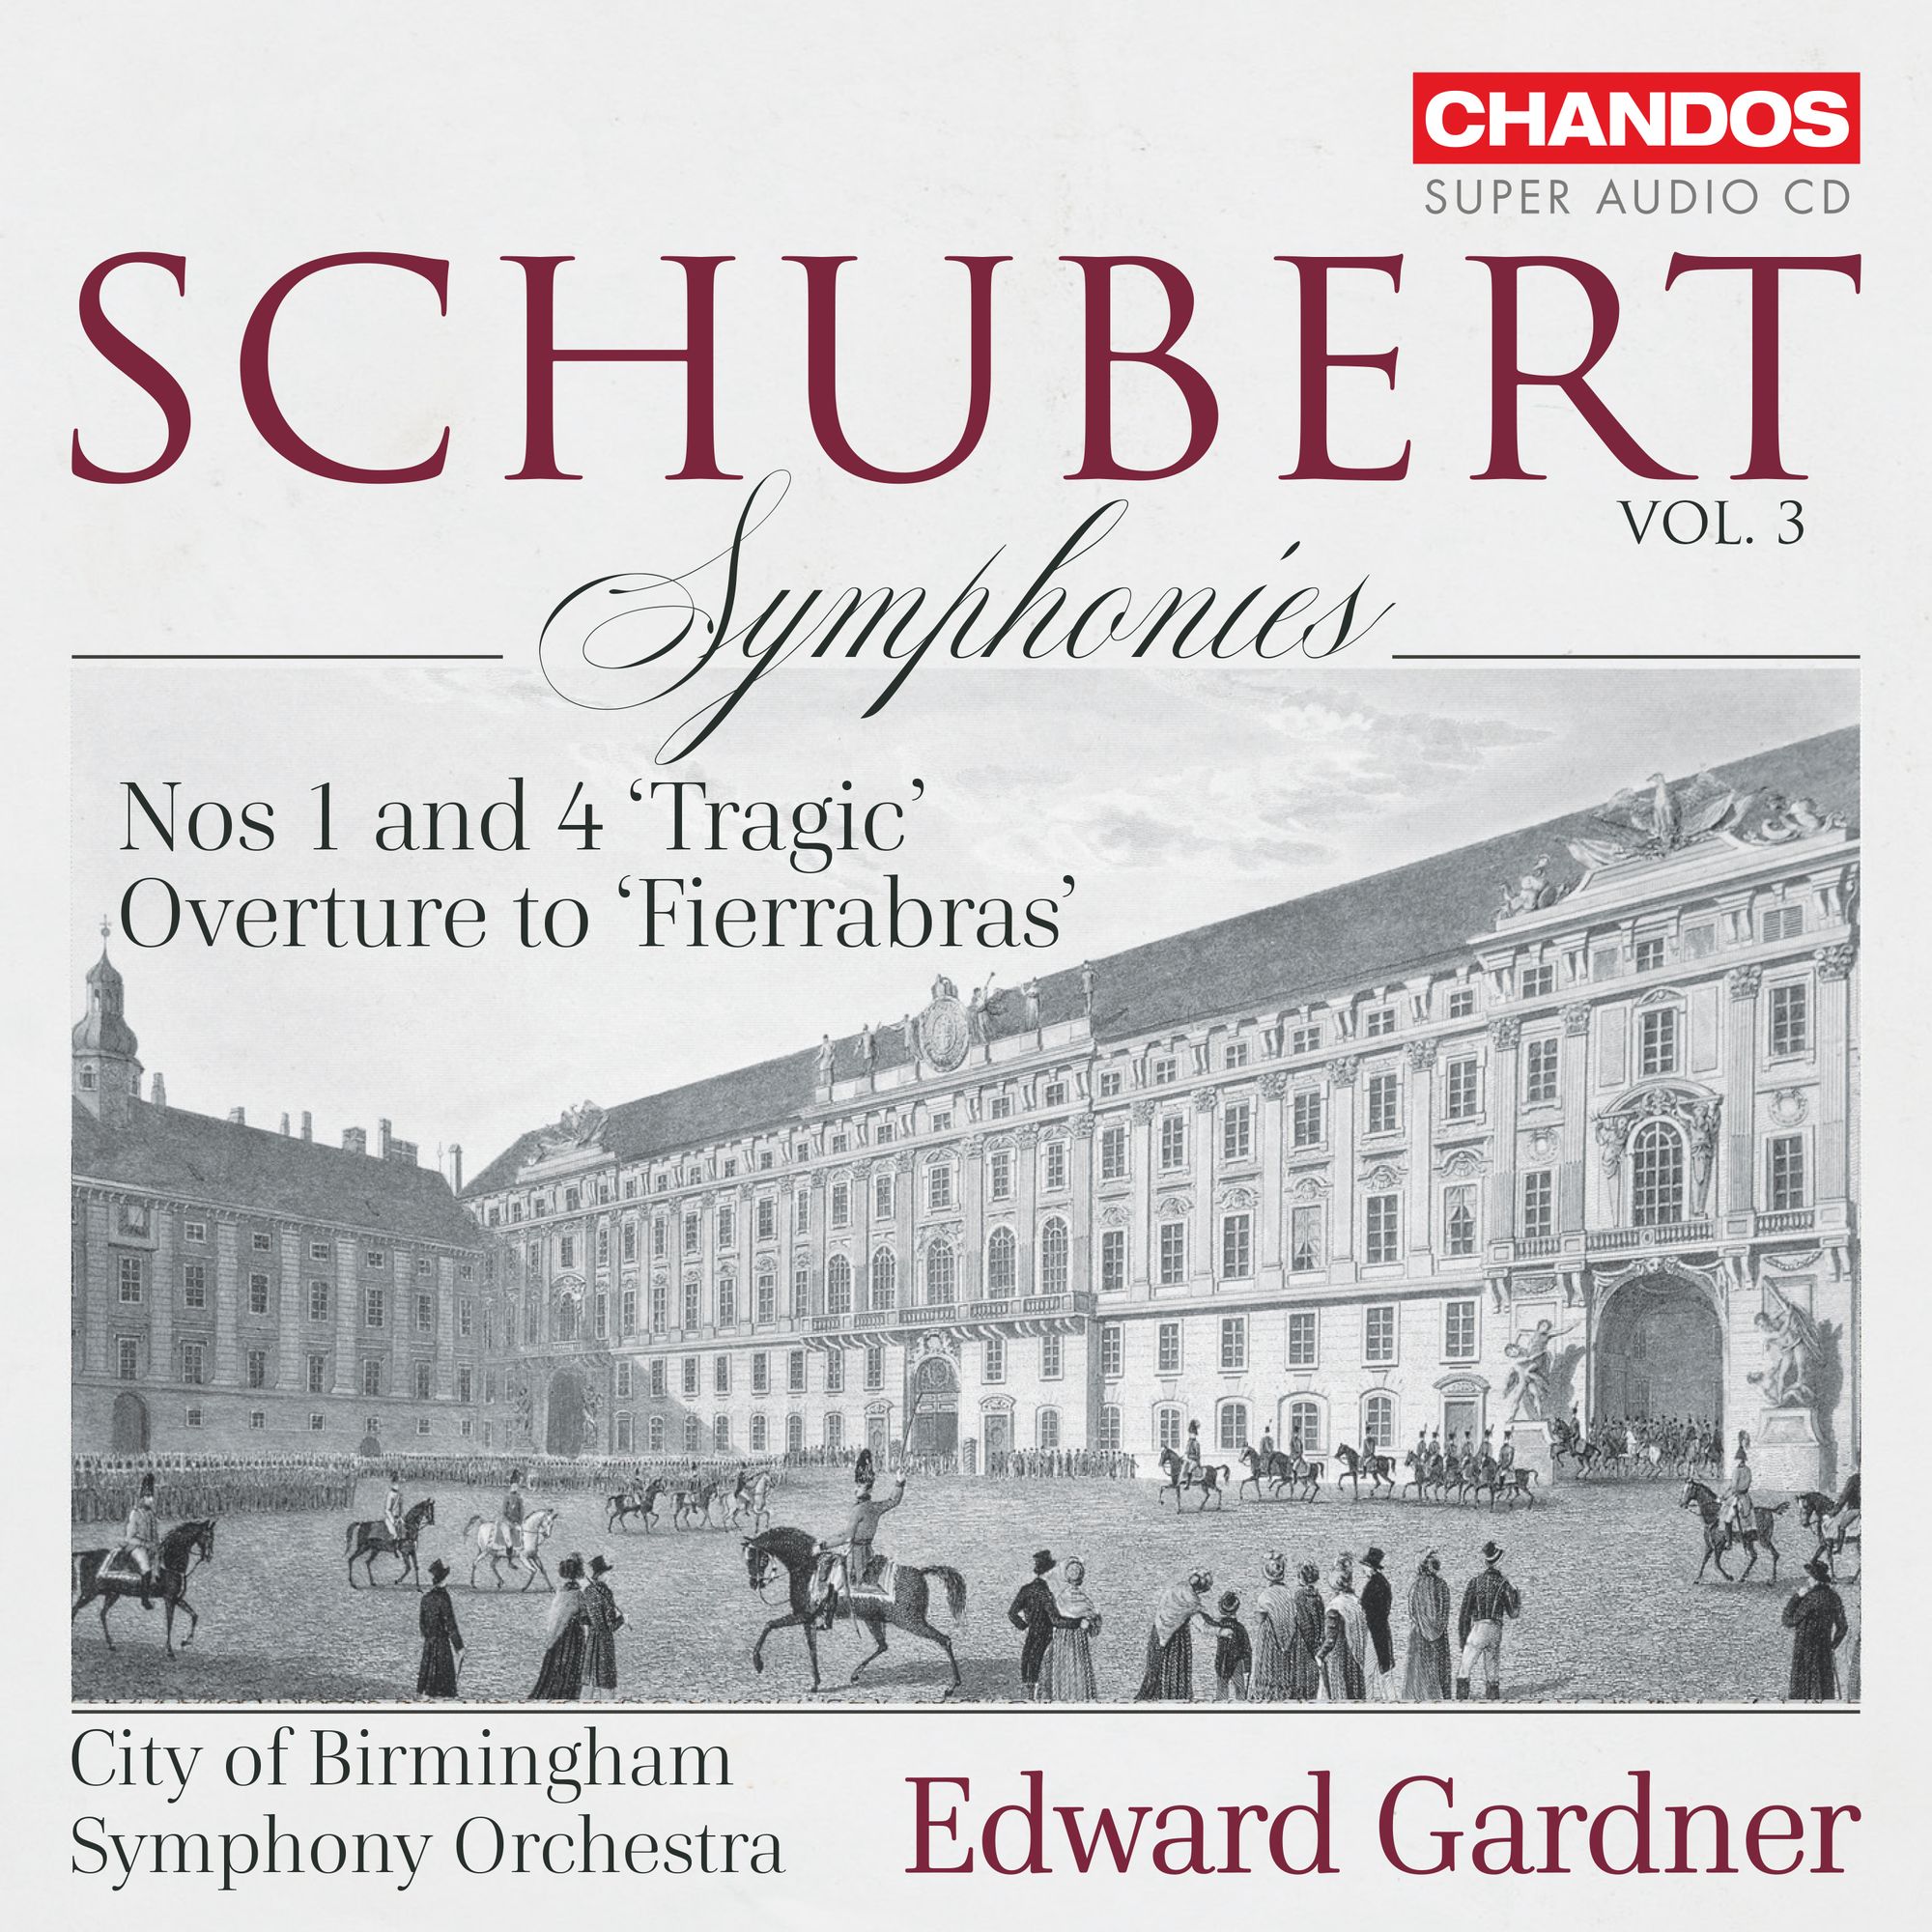 Schubert Symphonies from Birmingham (and the Schubertiade Hohenems!)